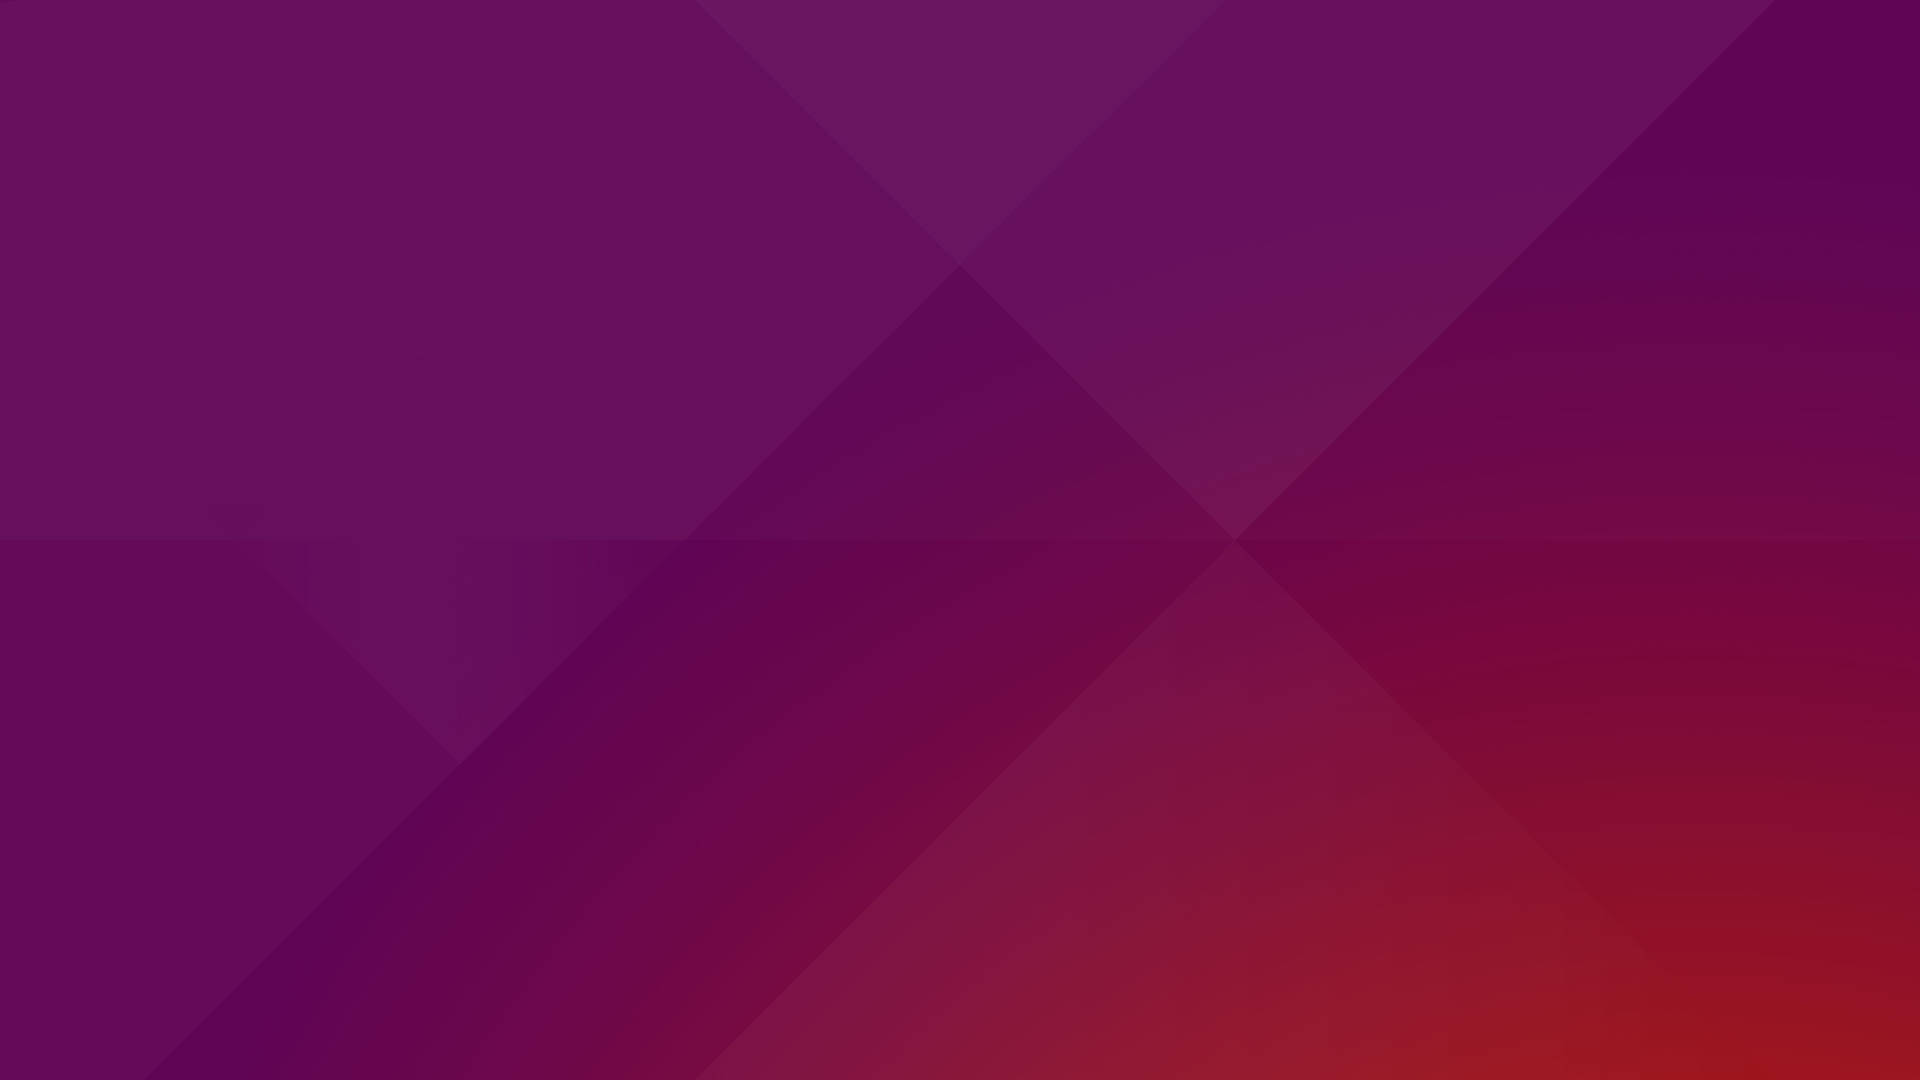 Ubuntu Purple And Orange 4k